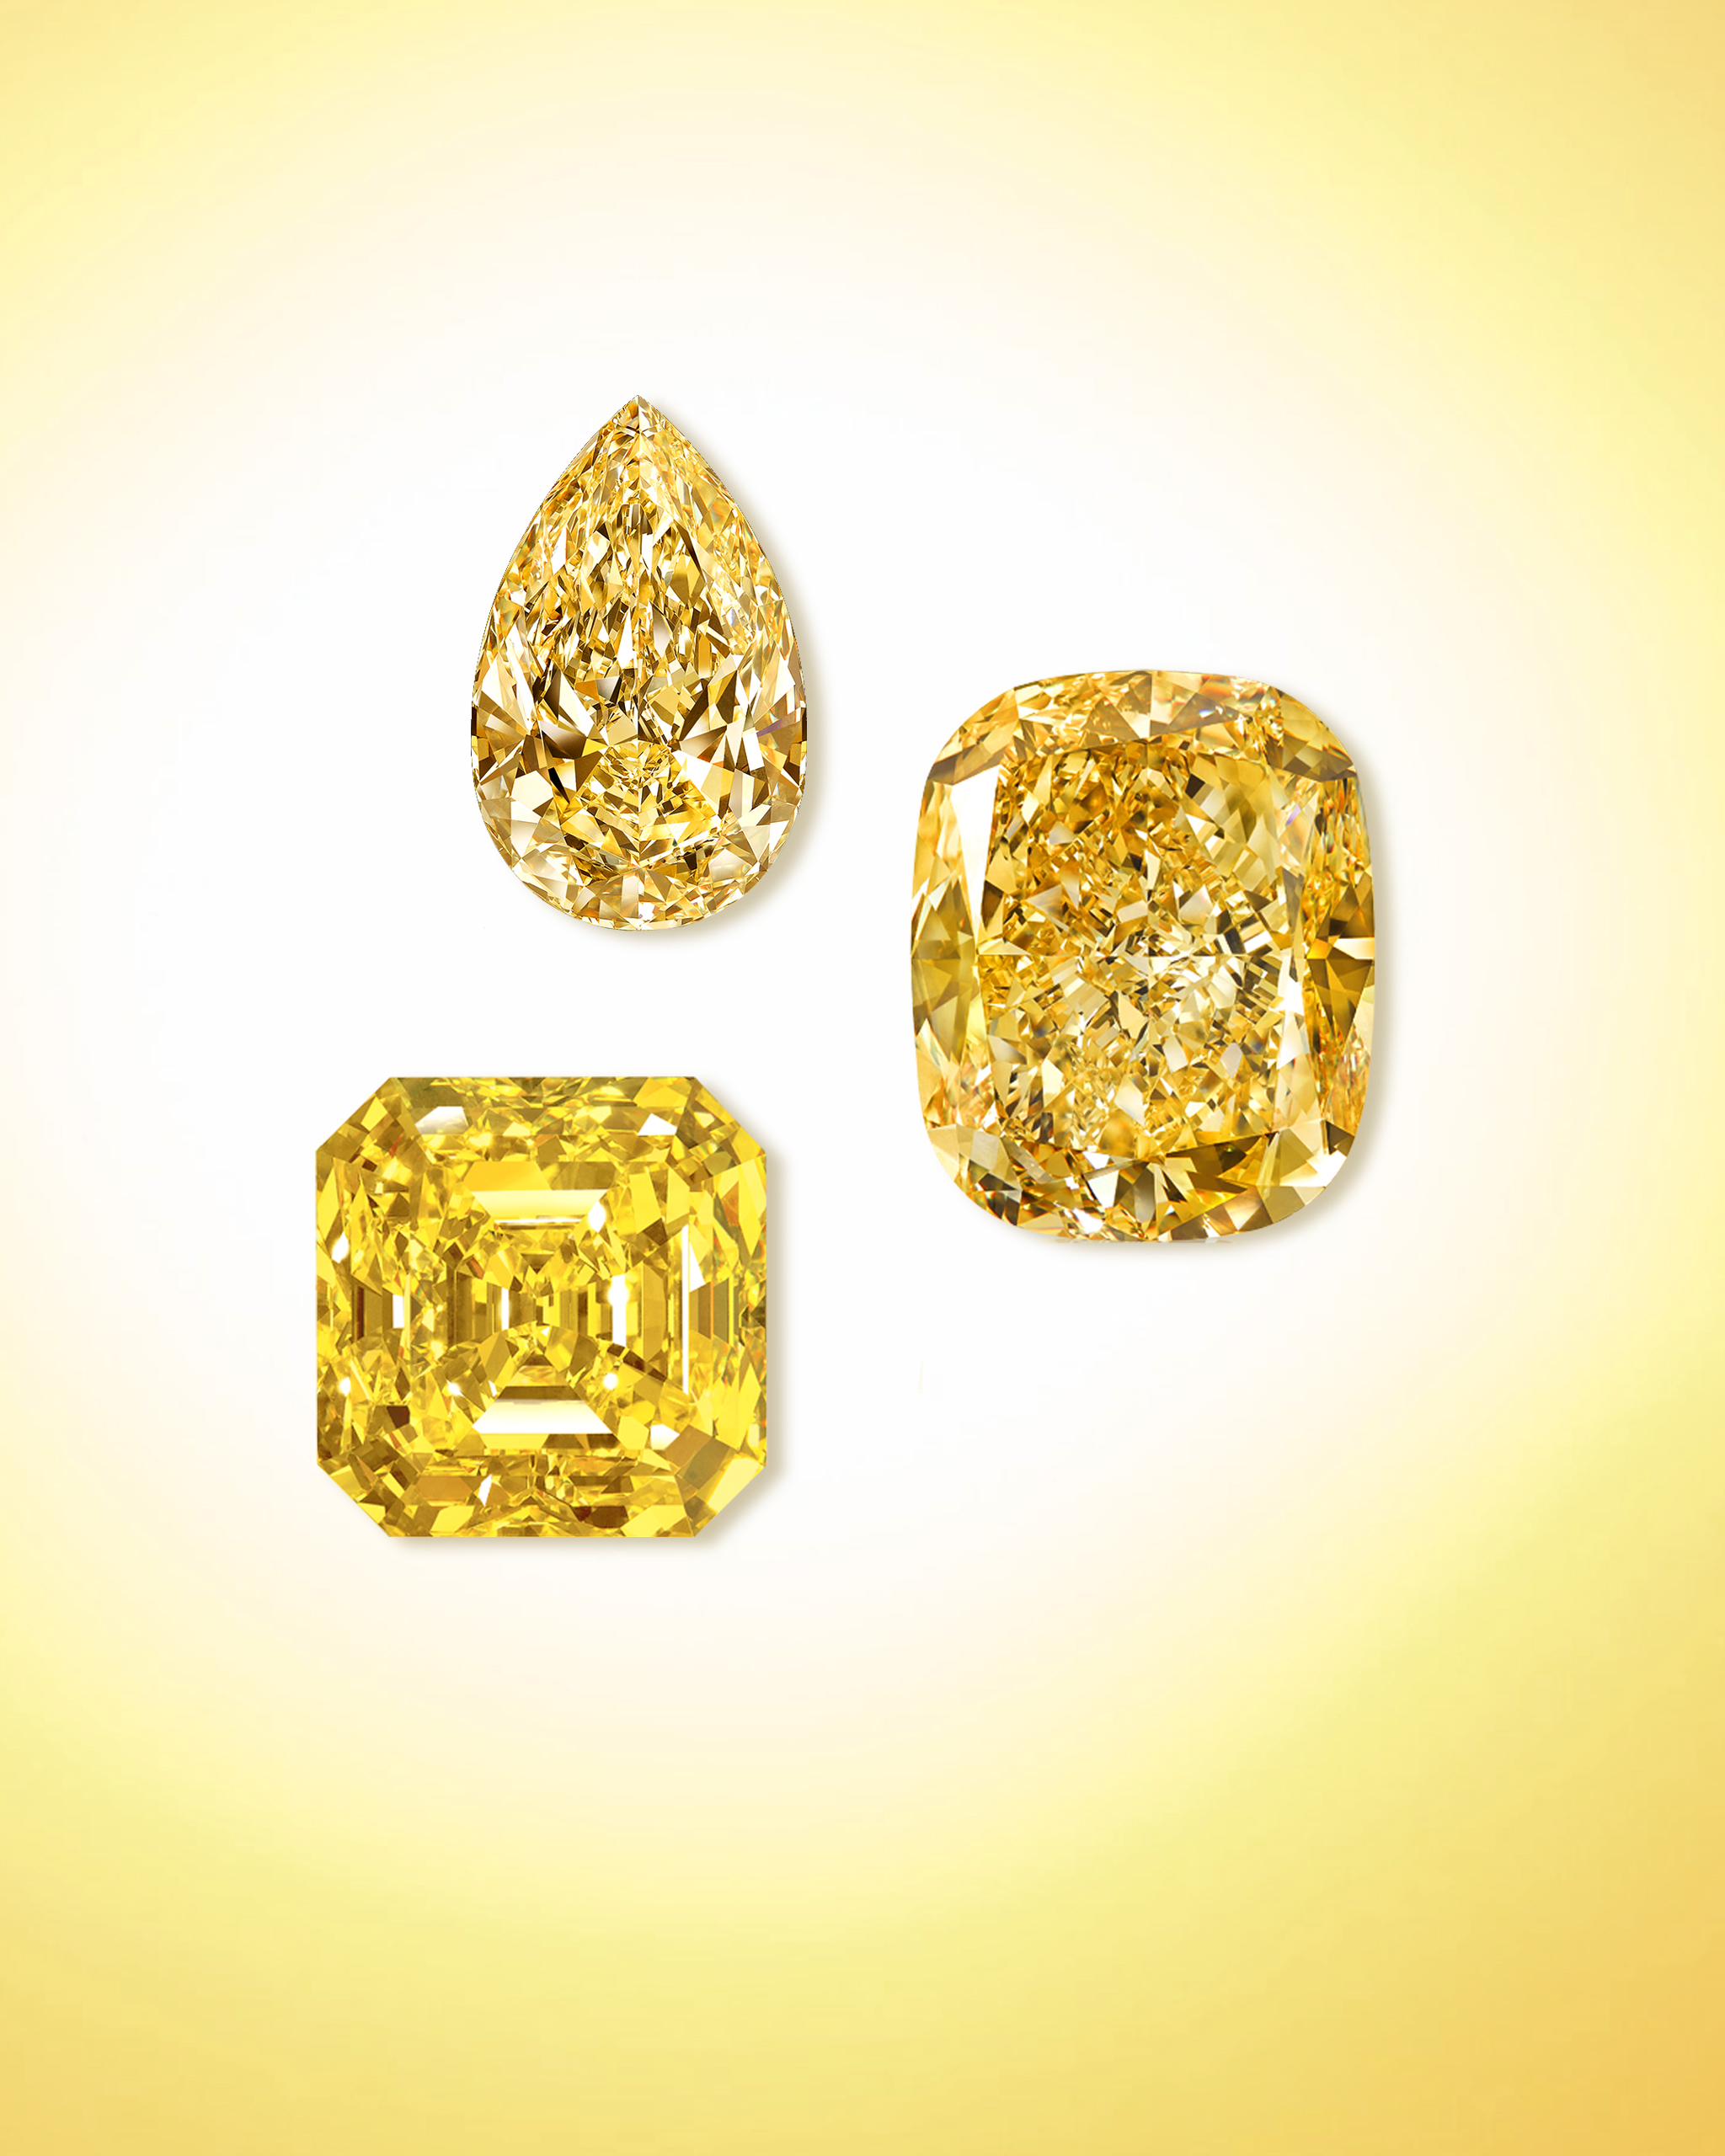 The Star of Bombay & The Golden Empress: a yellow pear shaped diamond, asscher cut diamond & radiant cut diamond from Graff